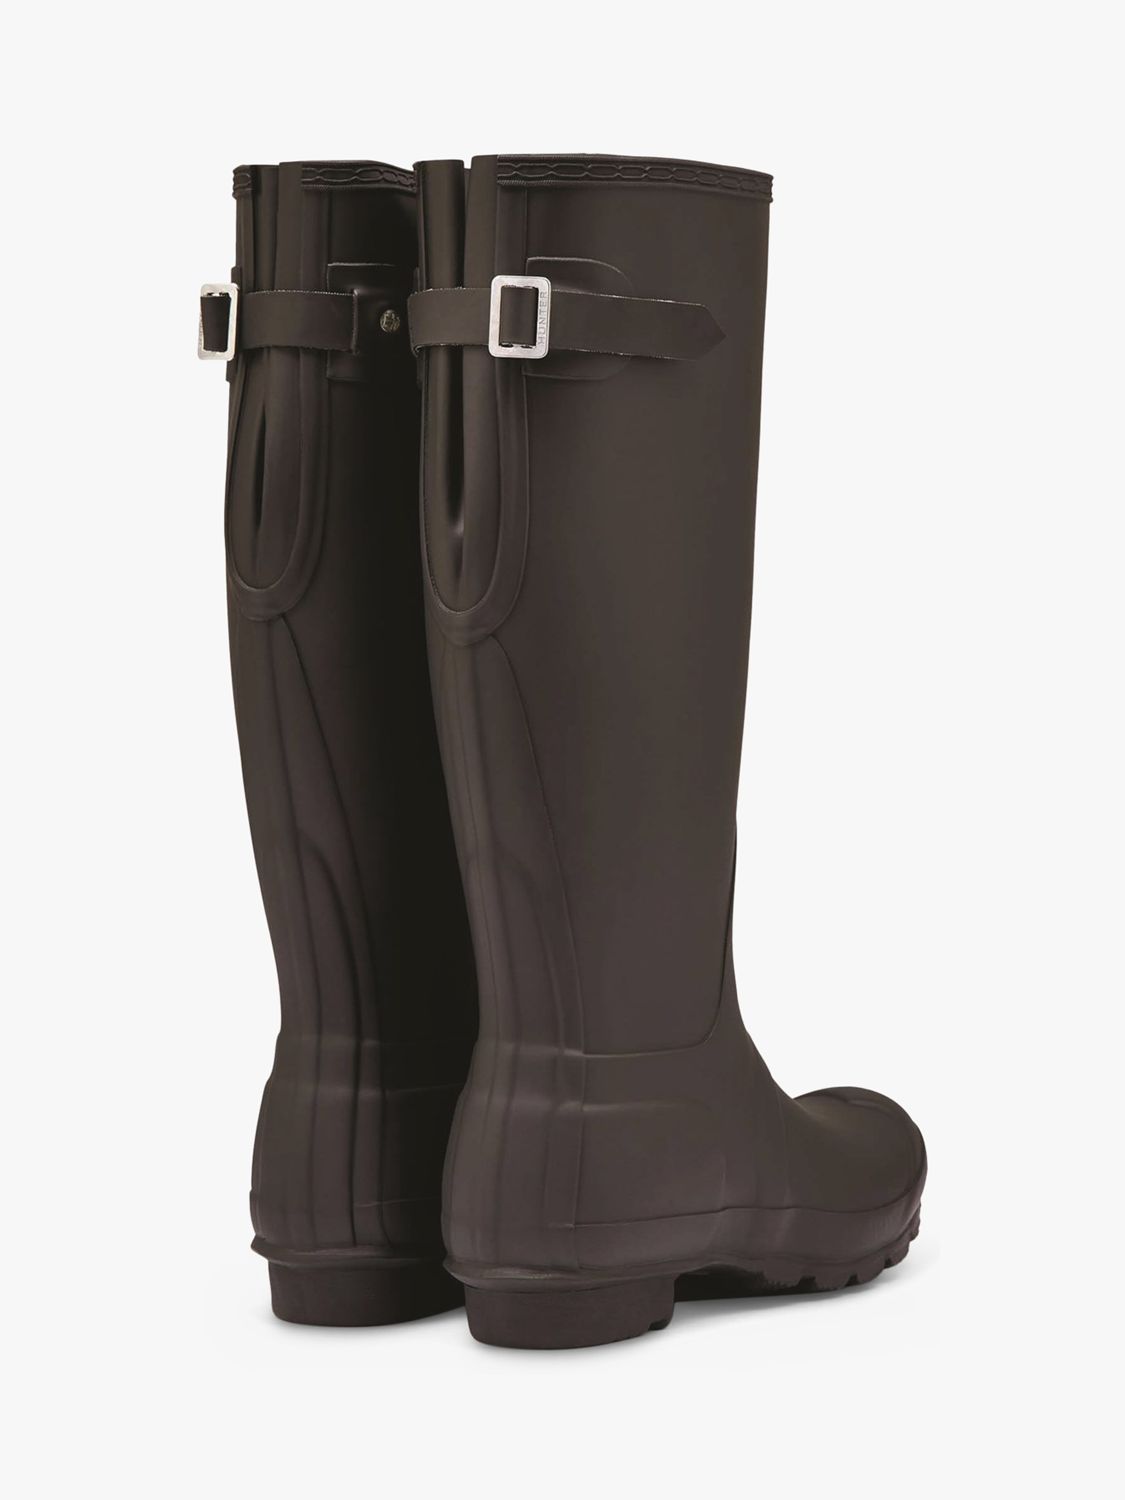 Hunter Original Tall Wellington Boots, Black, 3